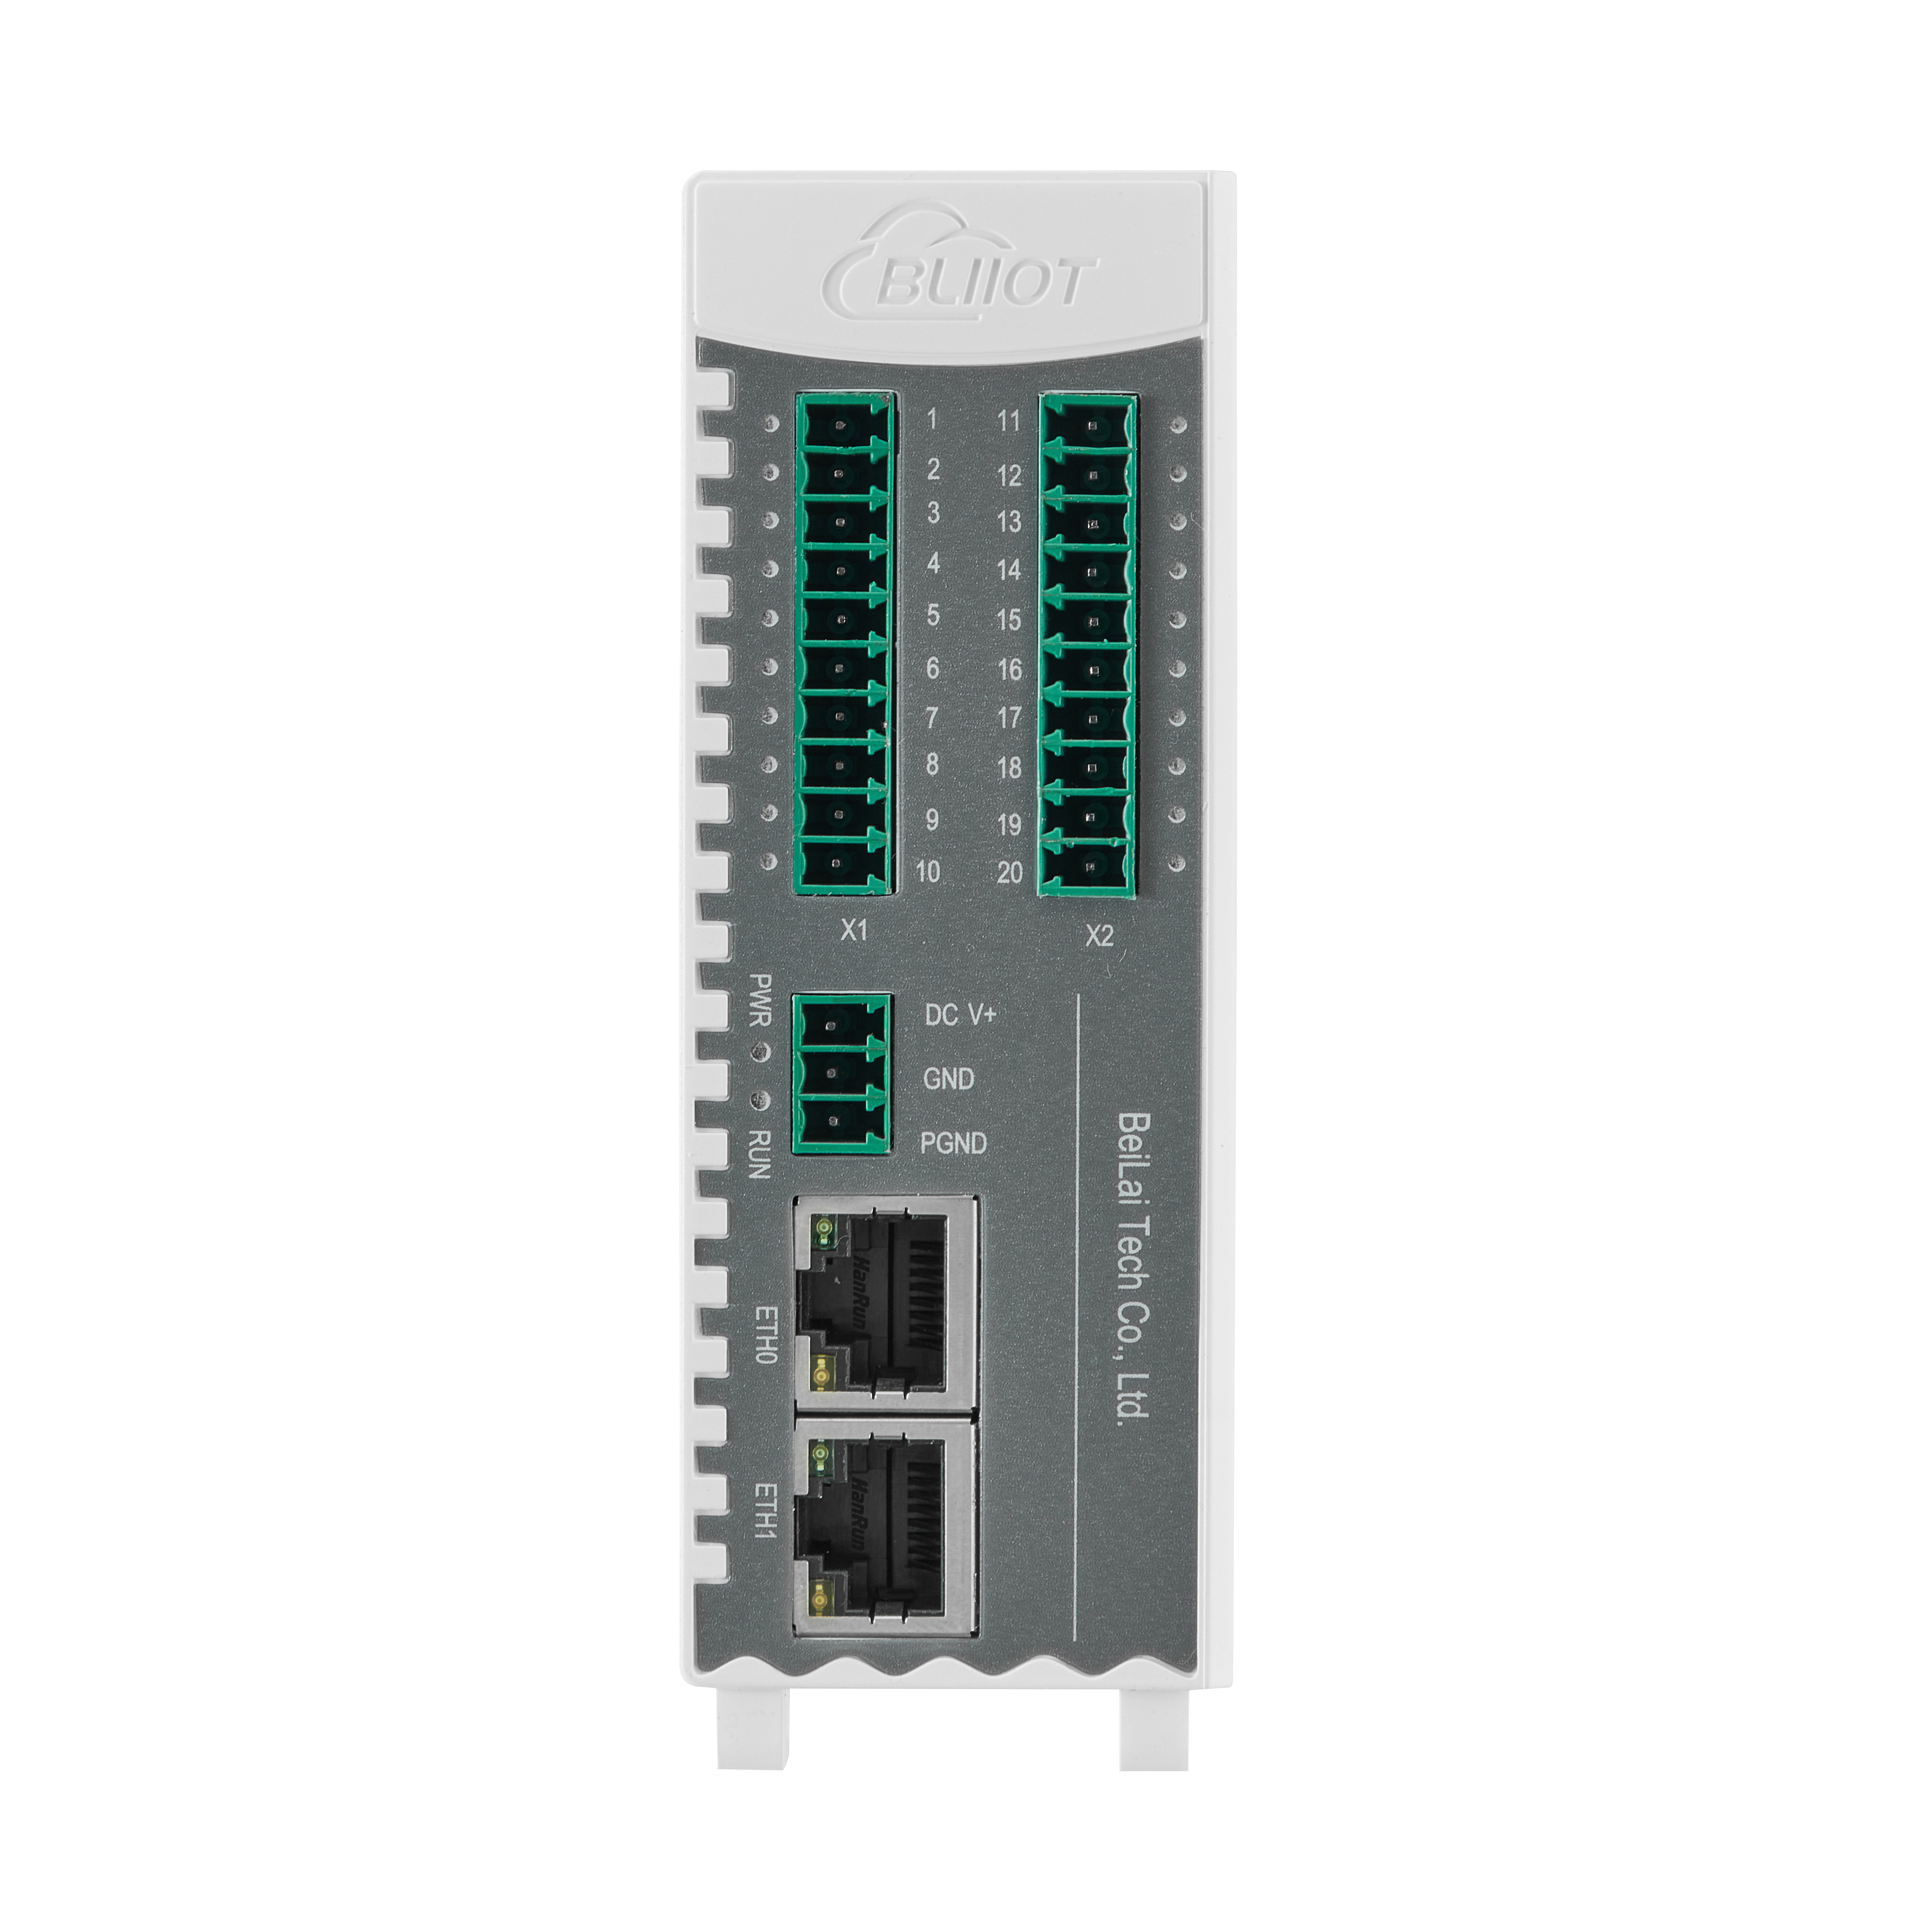 Industrial PROFINET Ethernet IO Module for Siemens PLC